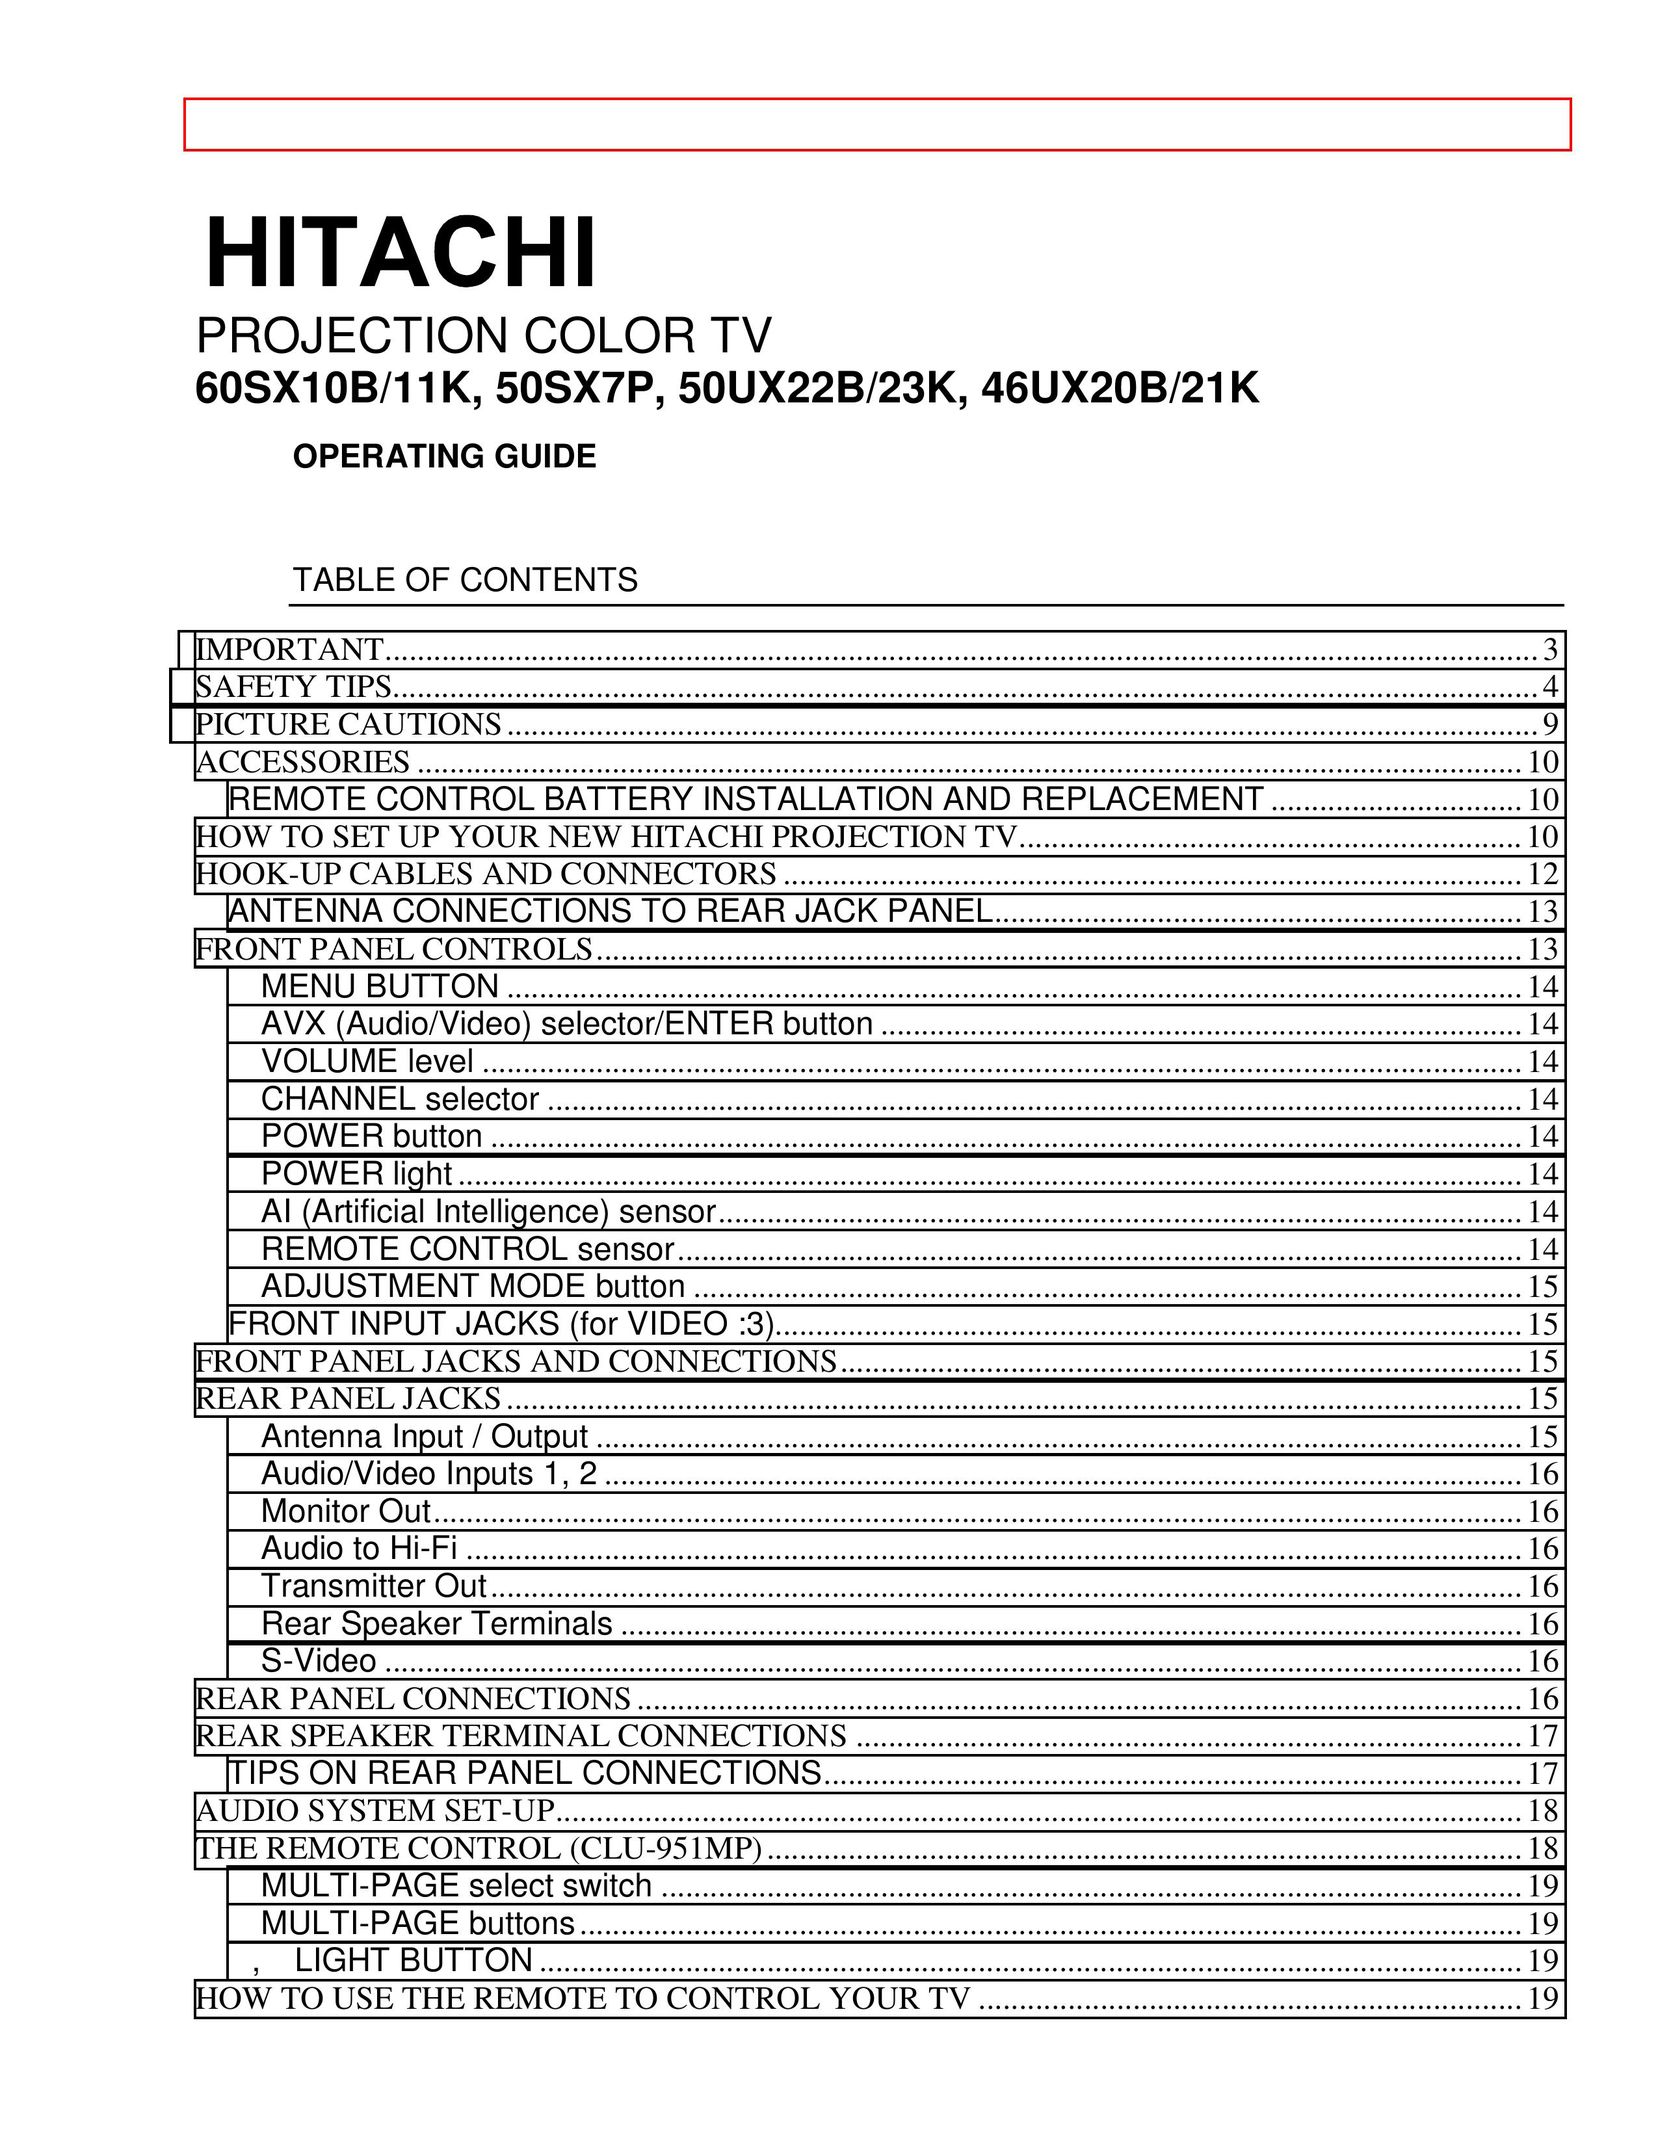 Hitachi 46UX20B Projection Television User Manual